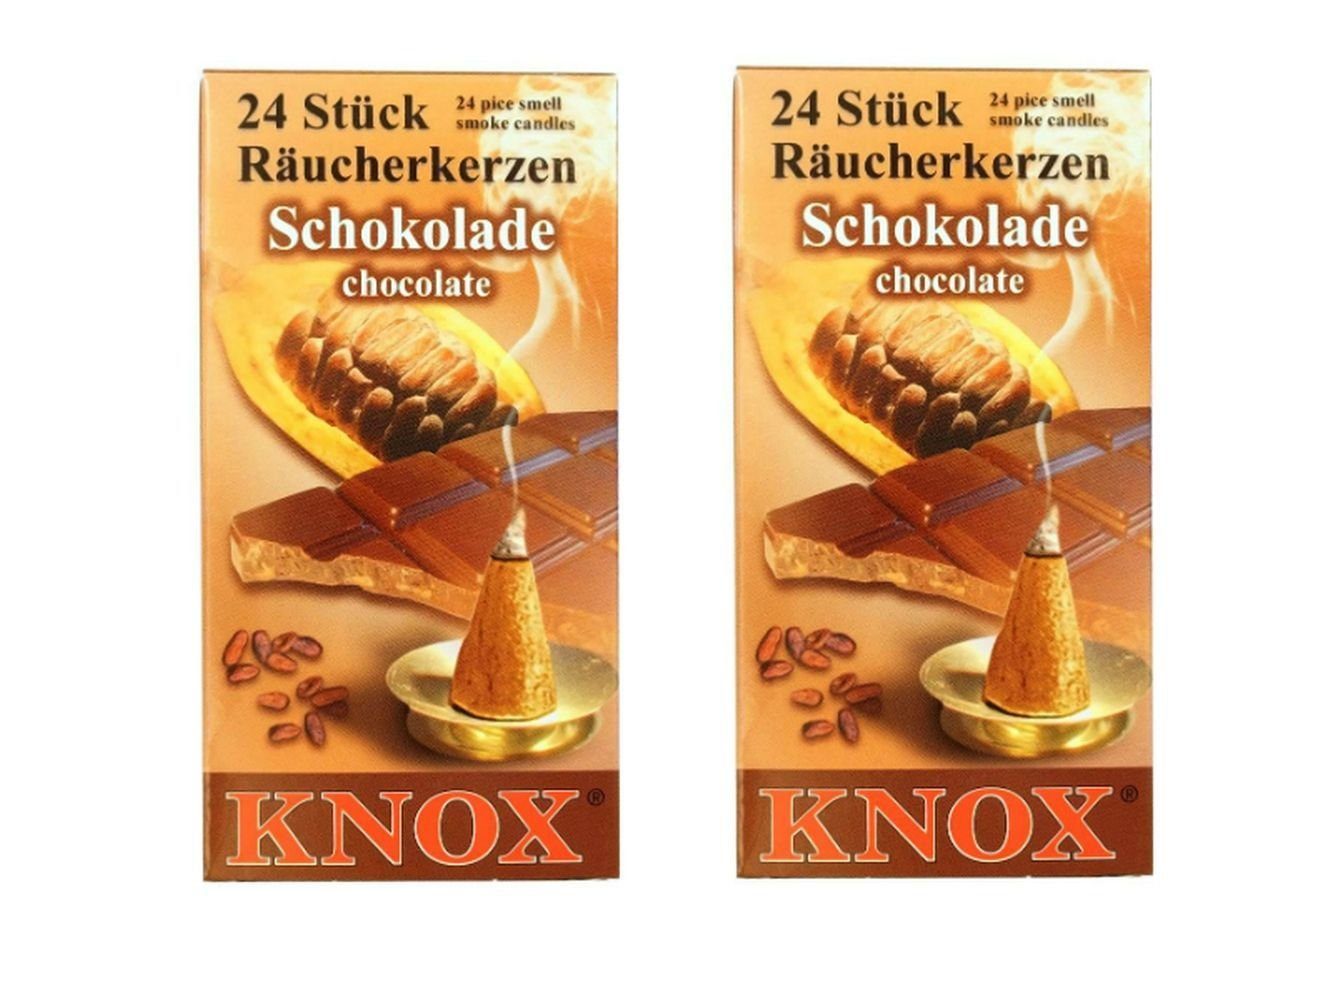 KNOX Räuchermännchen 2 Päckchen Räucherkerzen- Schokolade - 24er Packung